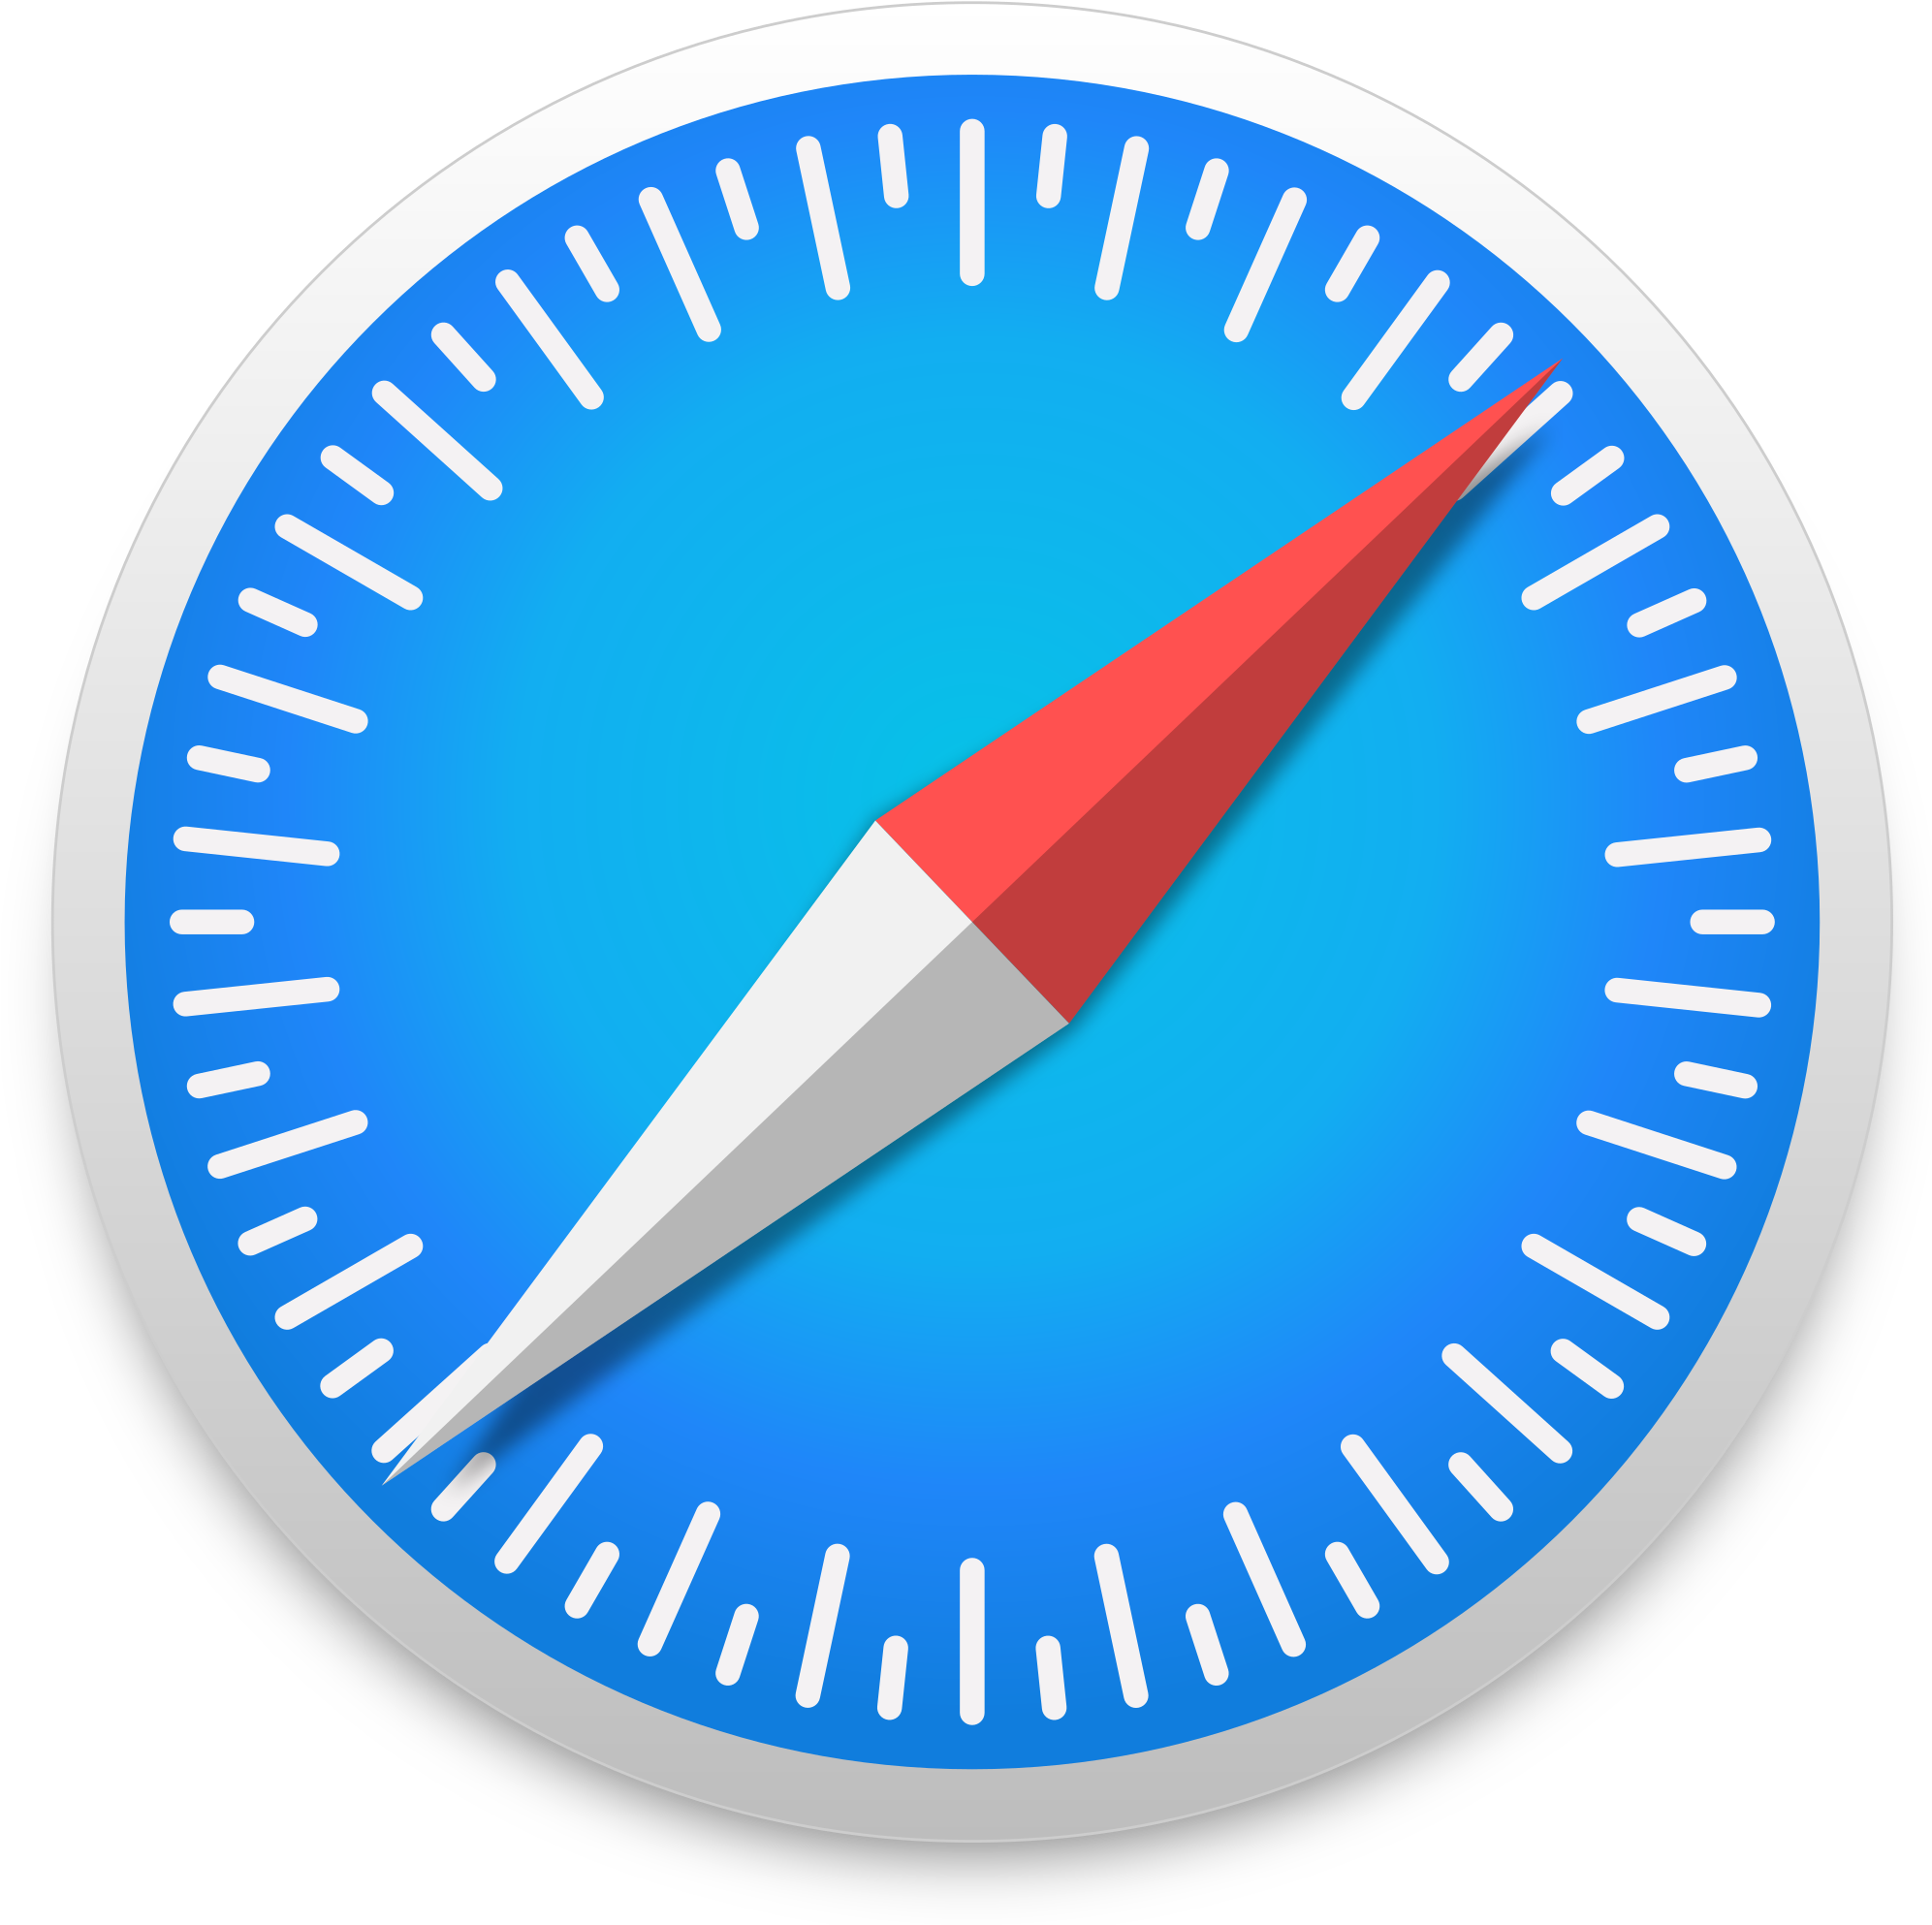 Open - Safari Browser Logo (2000x1991)